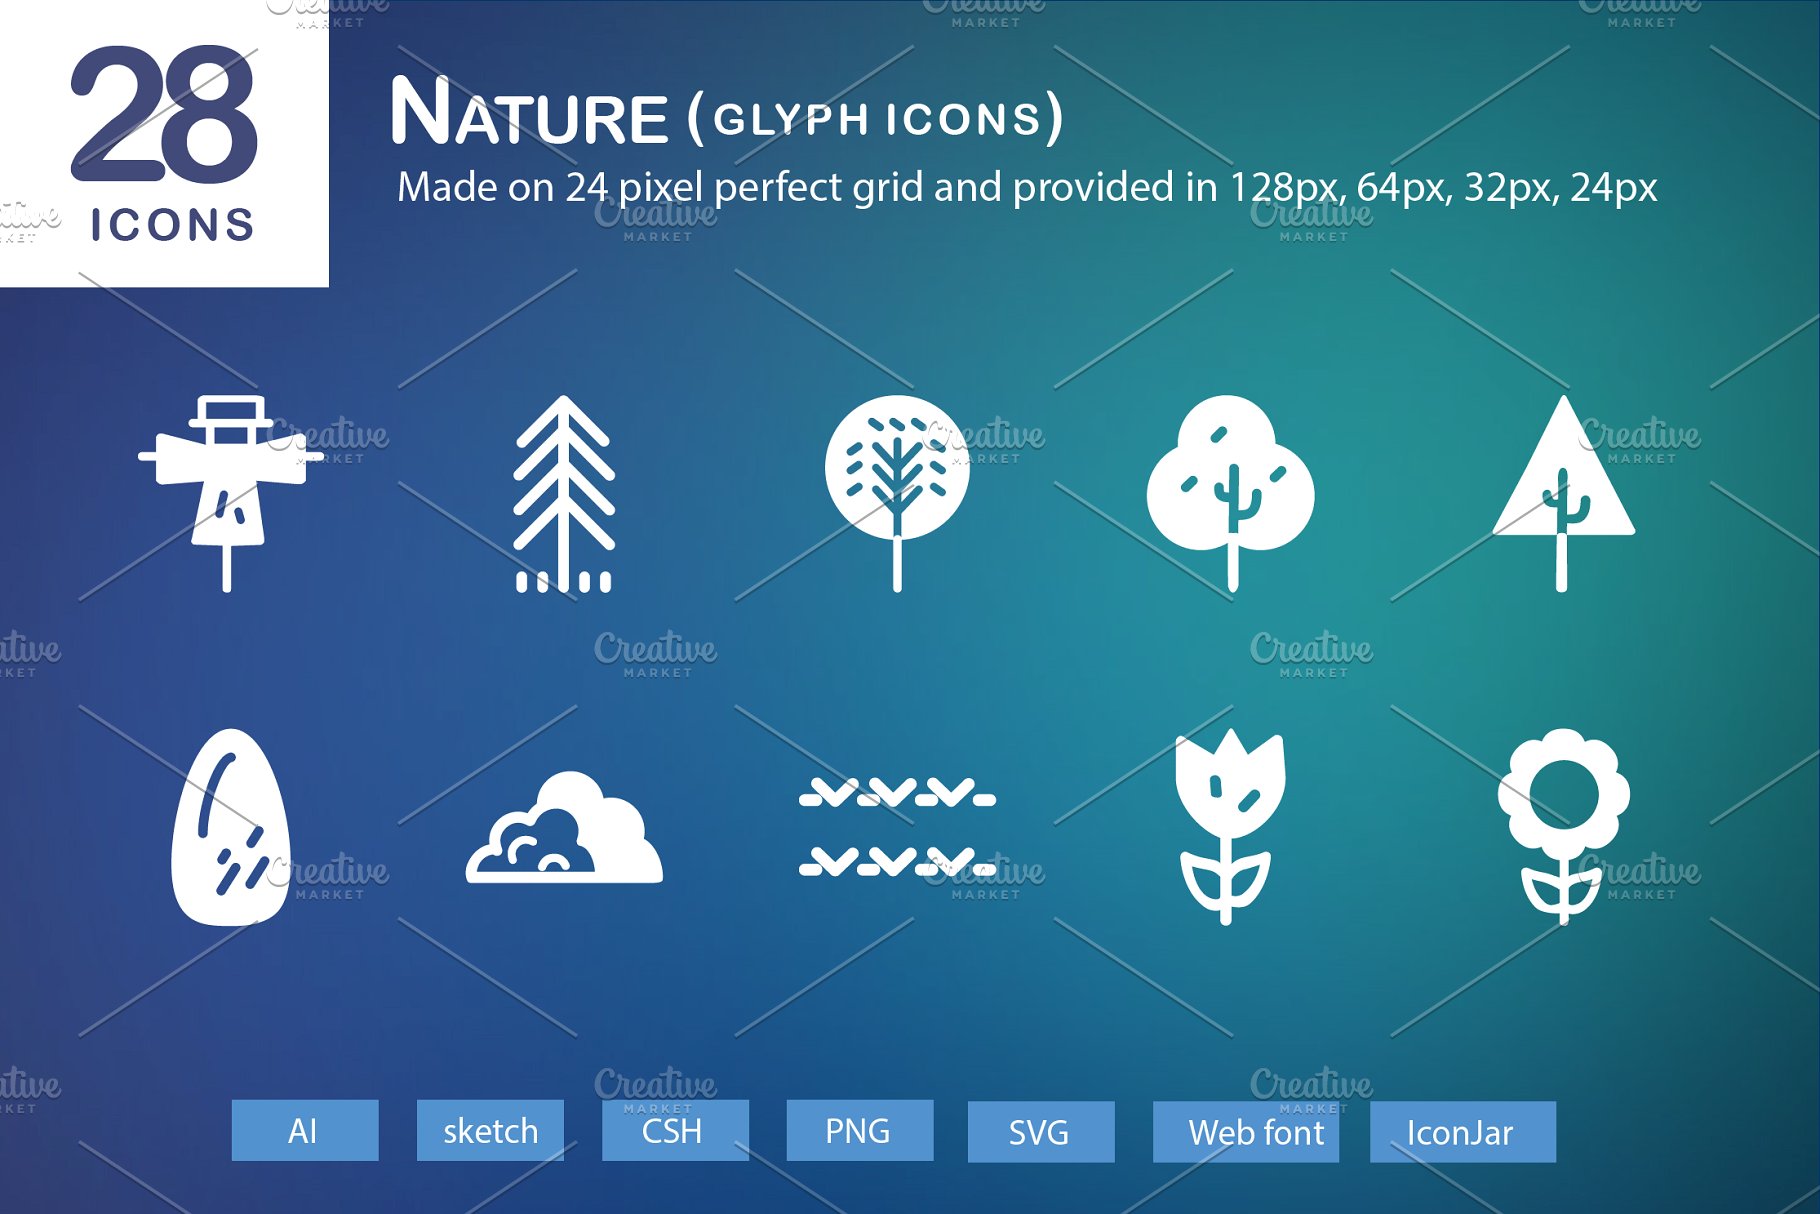 自然界主题的图标 28 Nature Glyph Icons